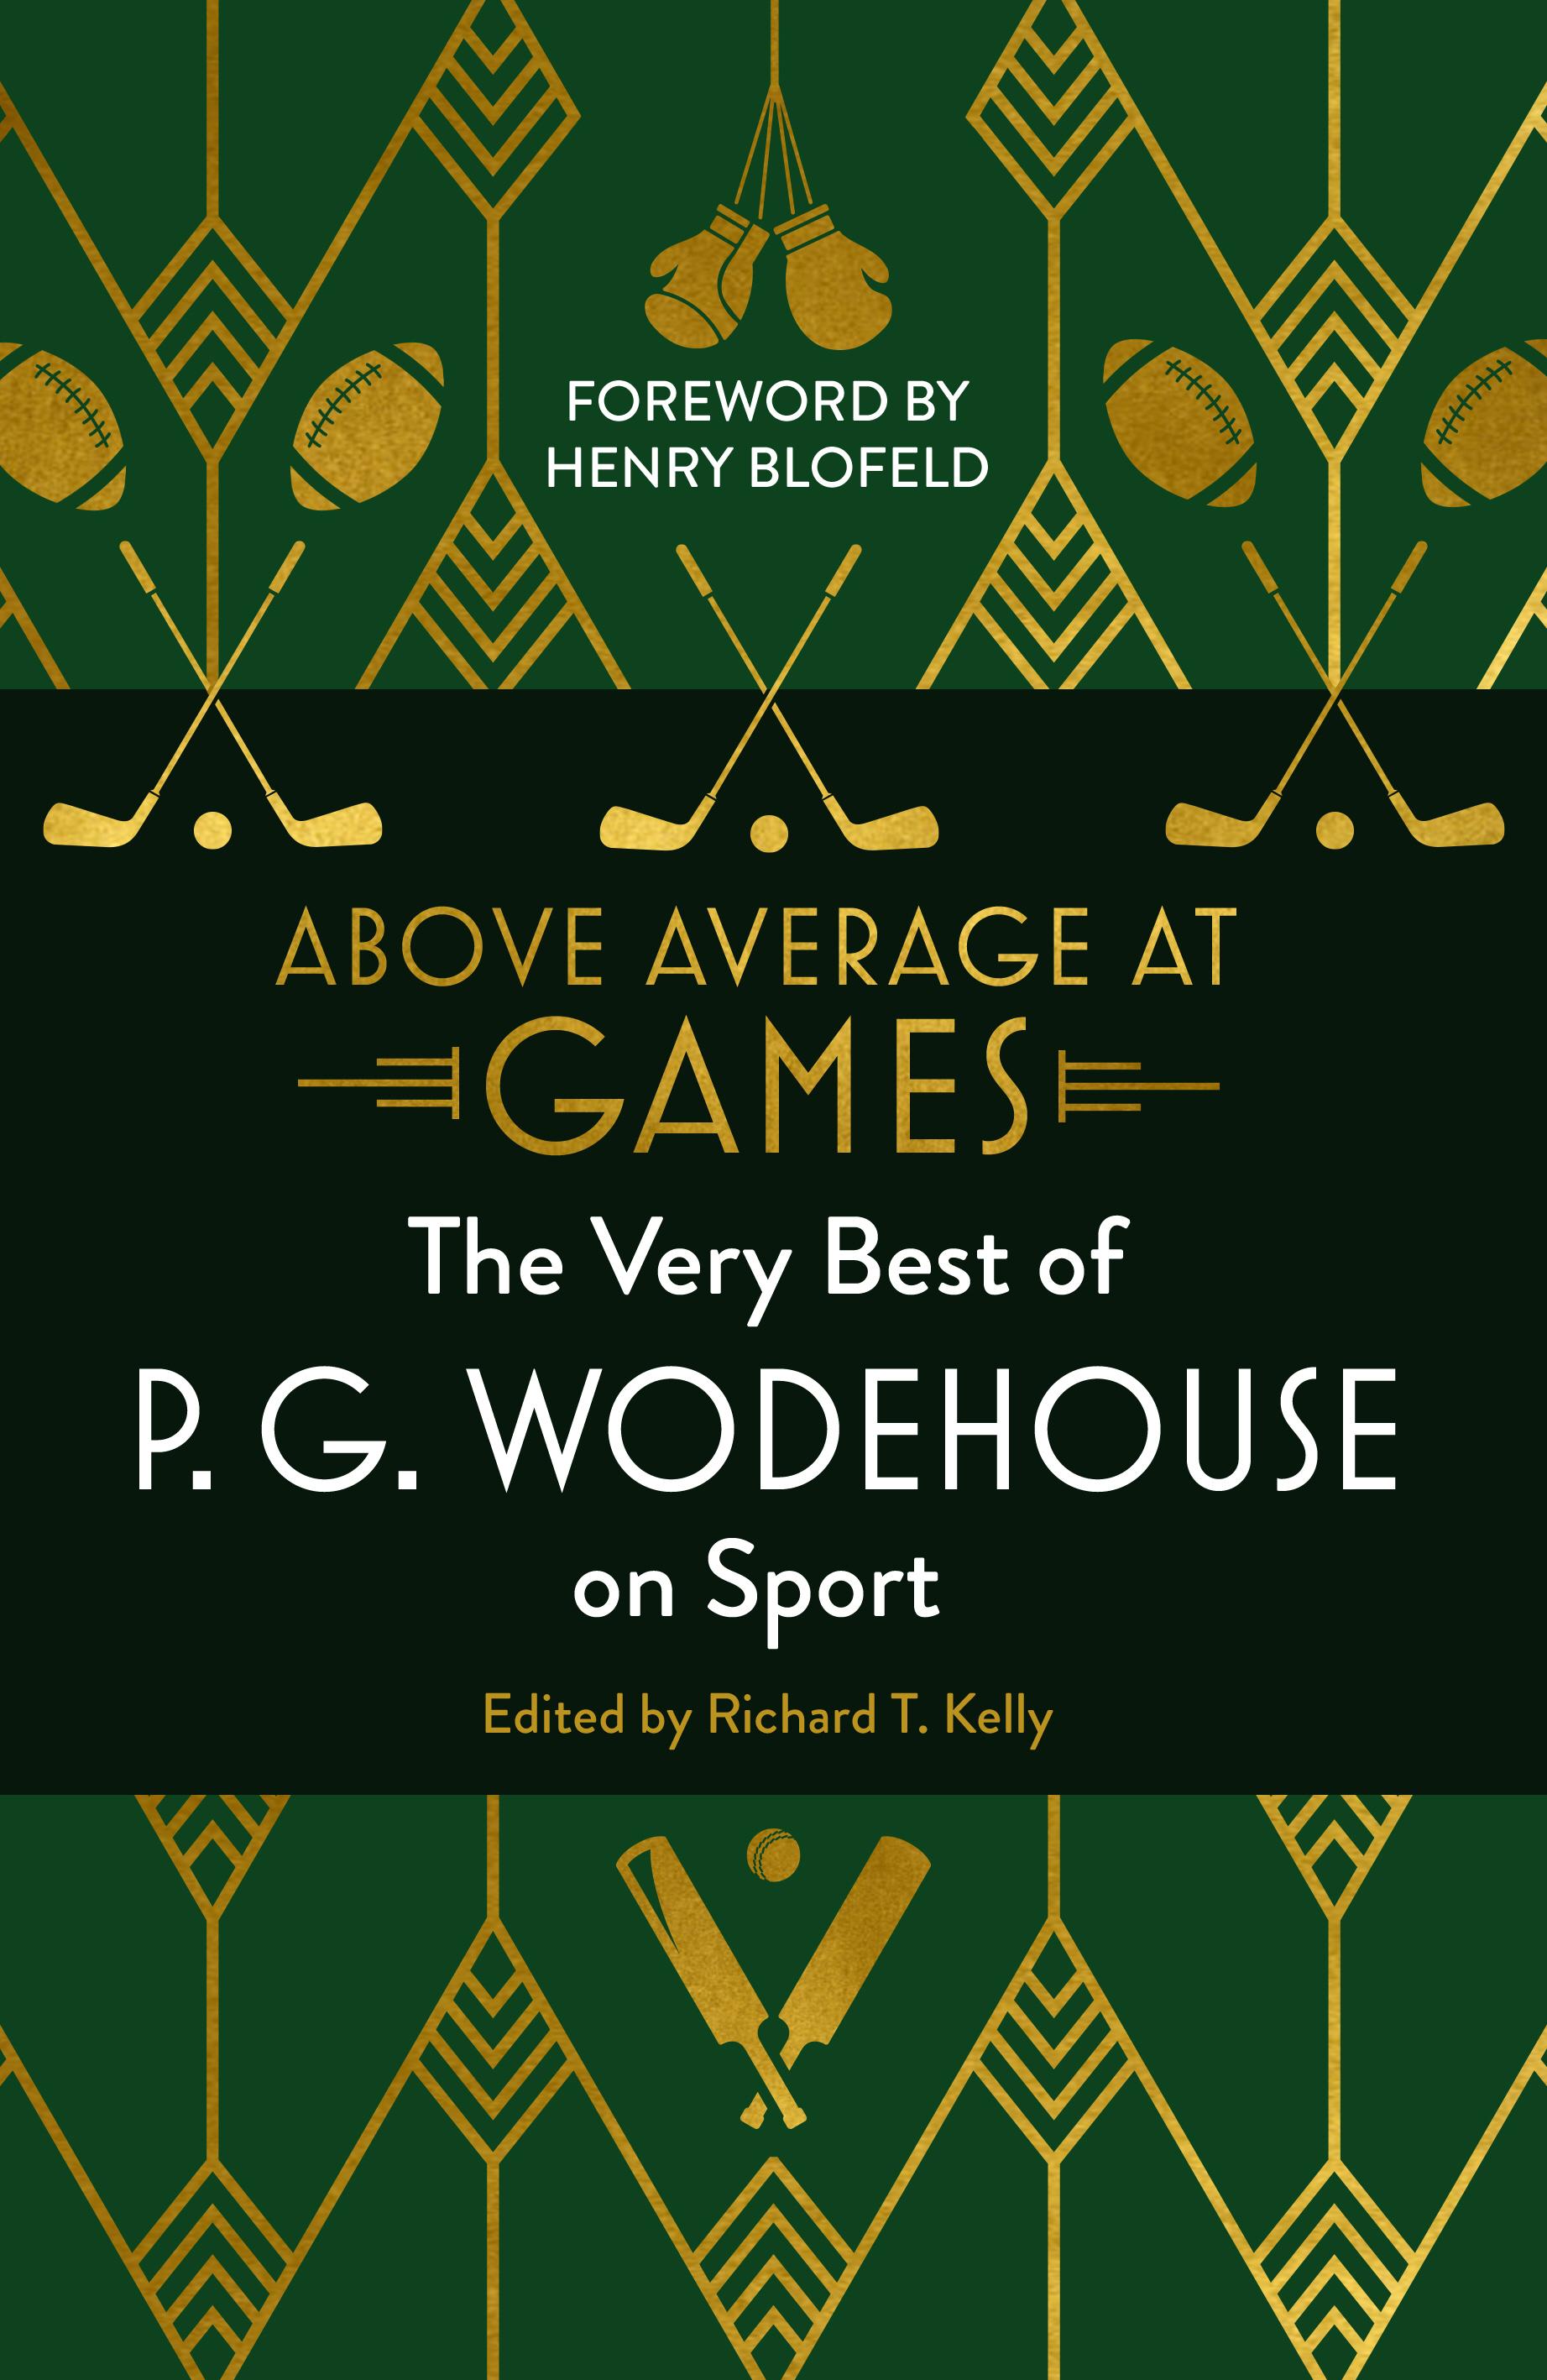 Above Average at Games - PG Wodehouse